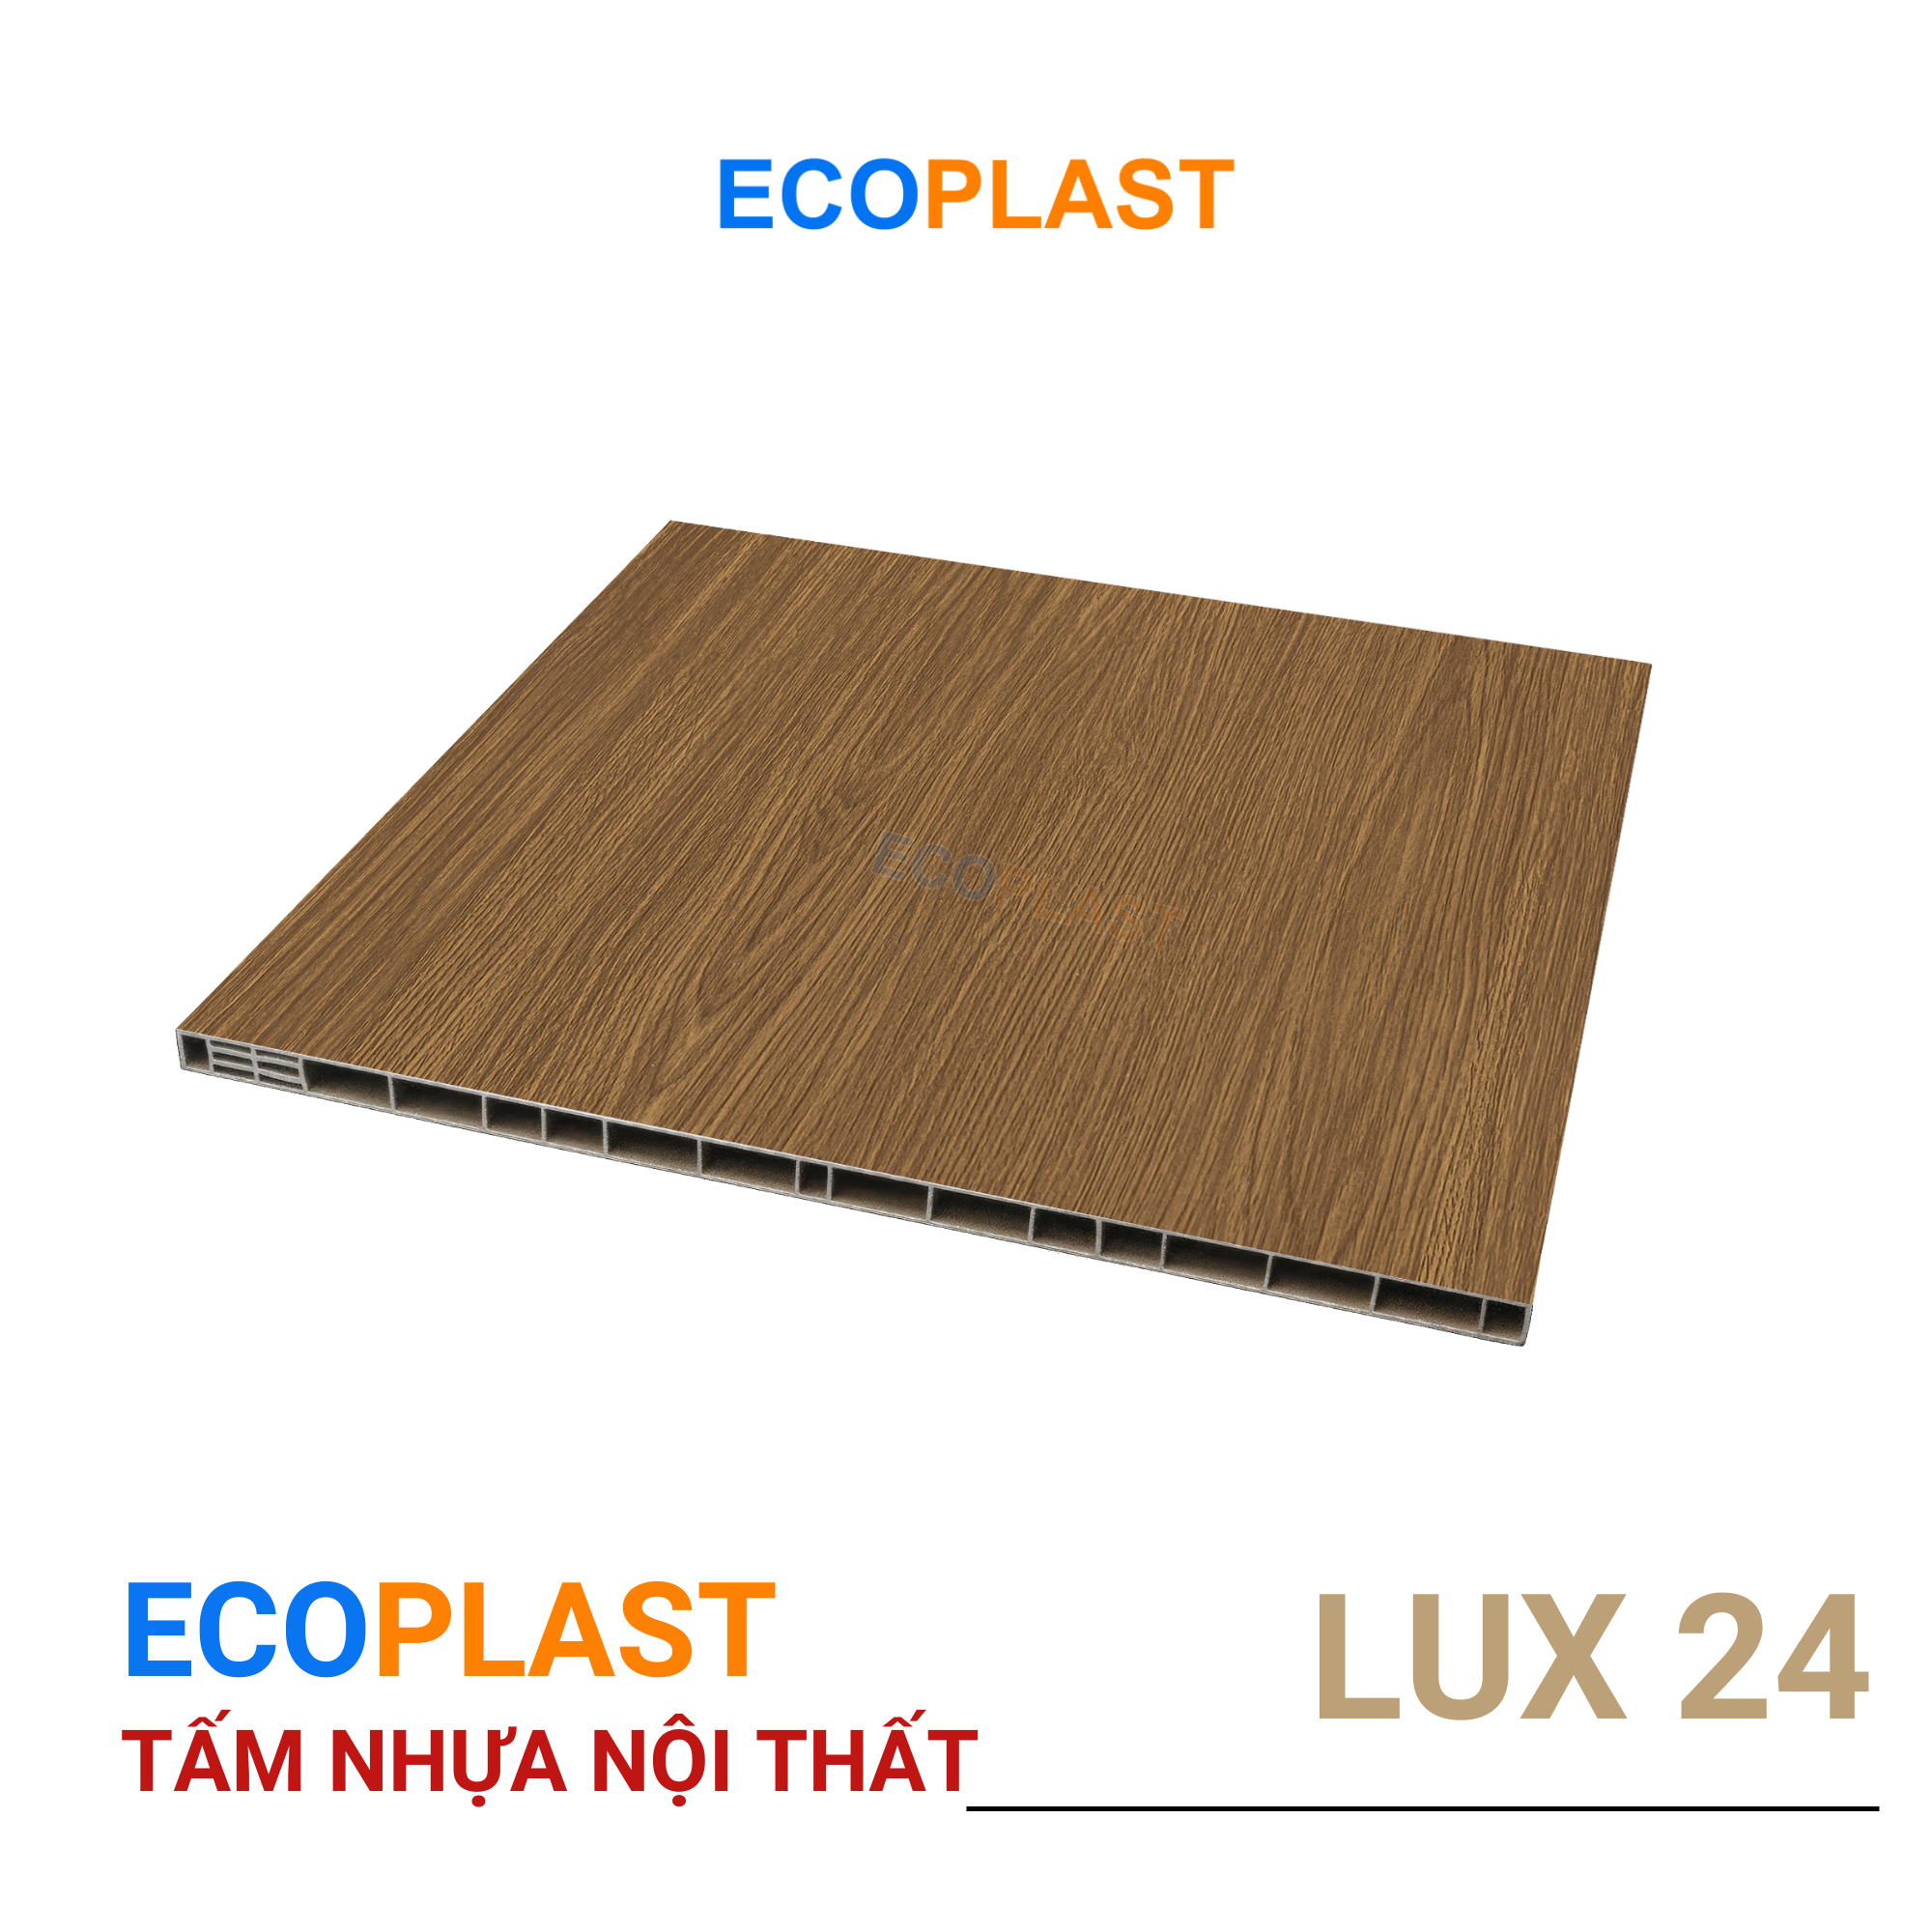 Tấm nhựa nội thất Ecoplast Luxury - Lux 24